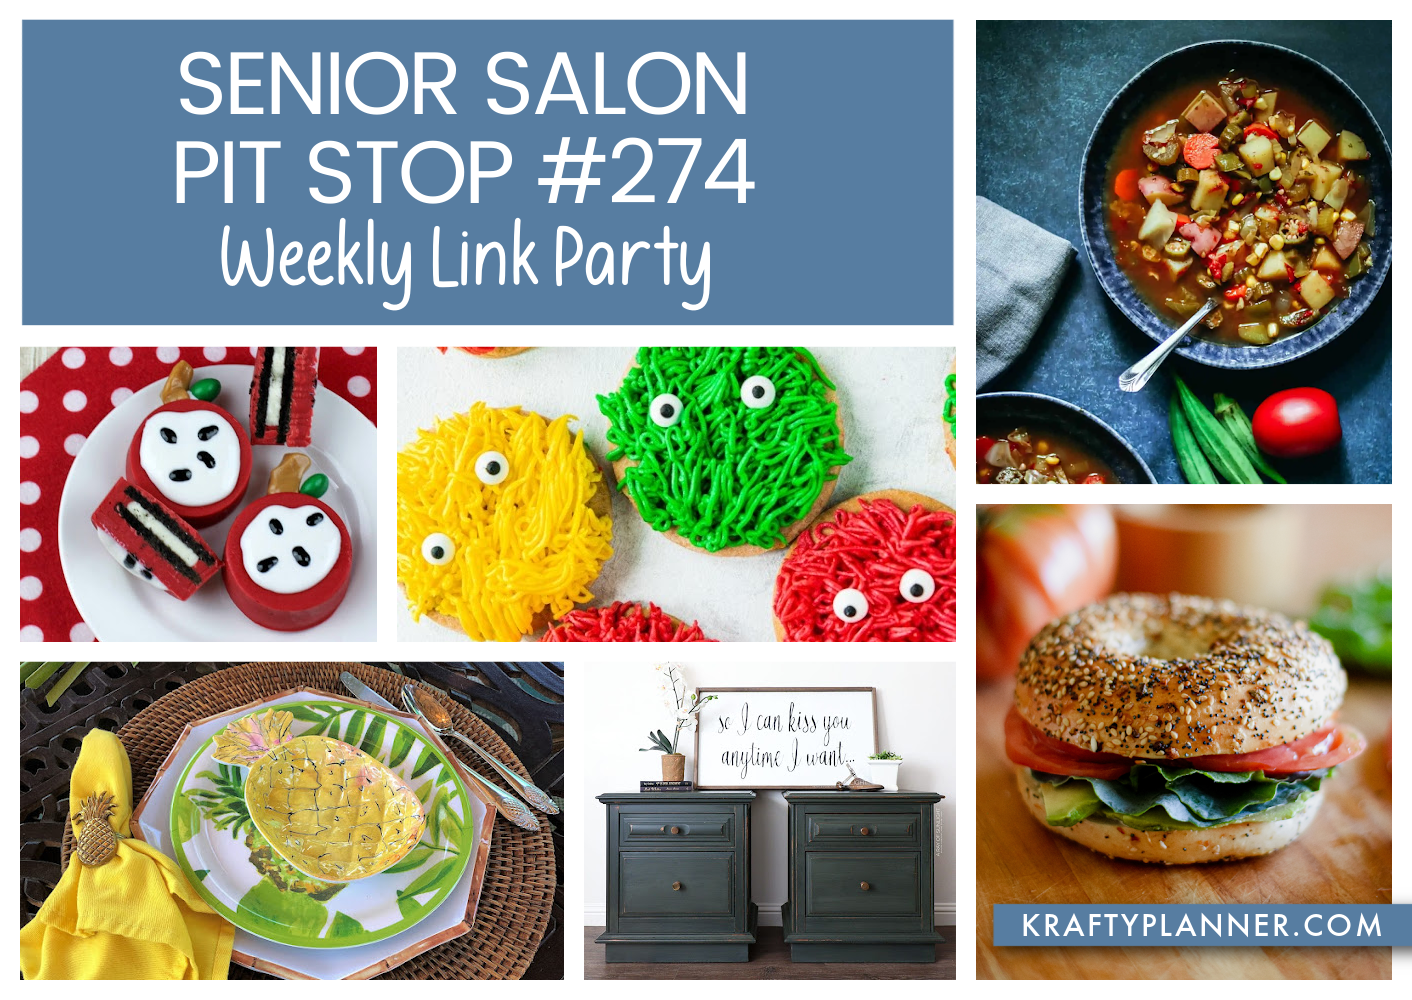 Senior Salon Pit Stop #274